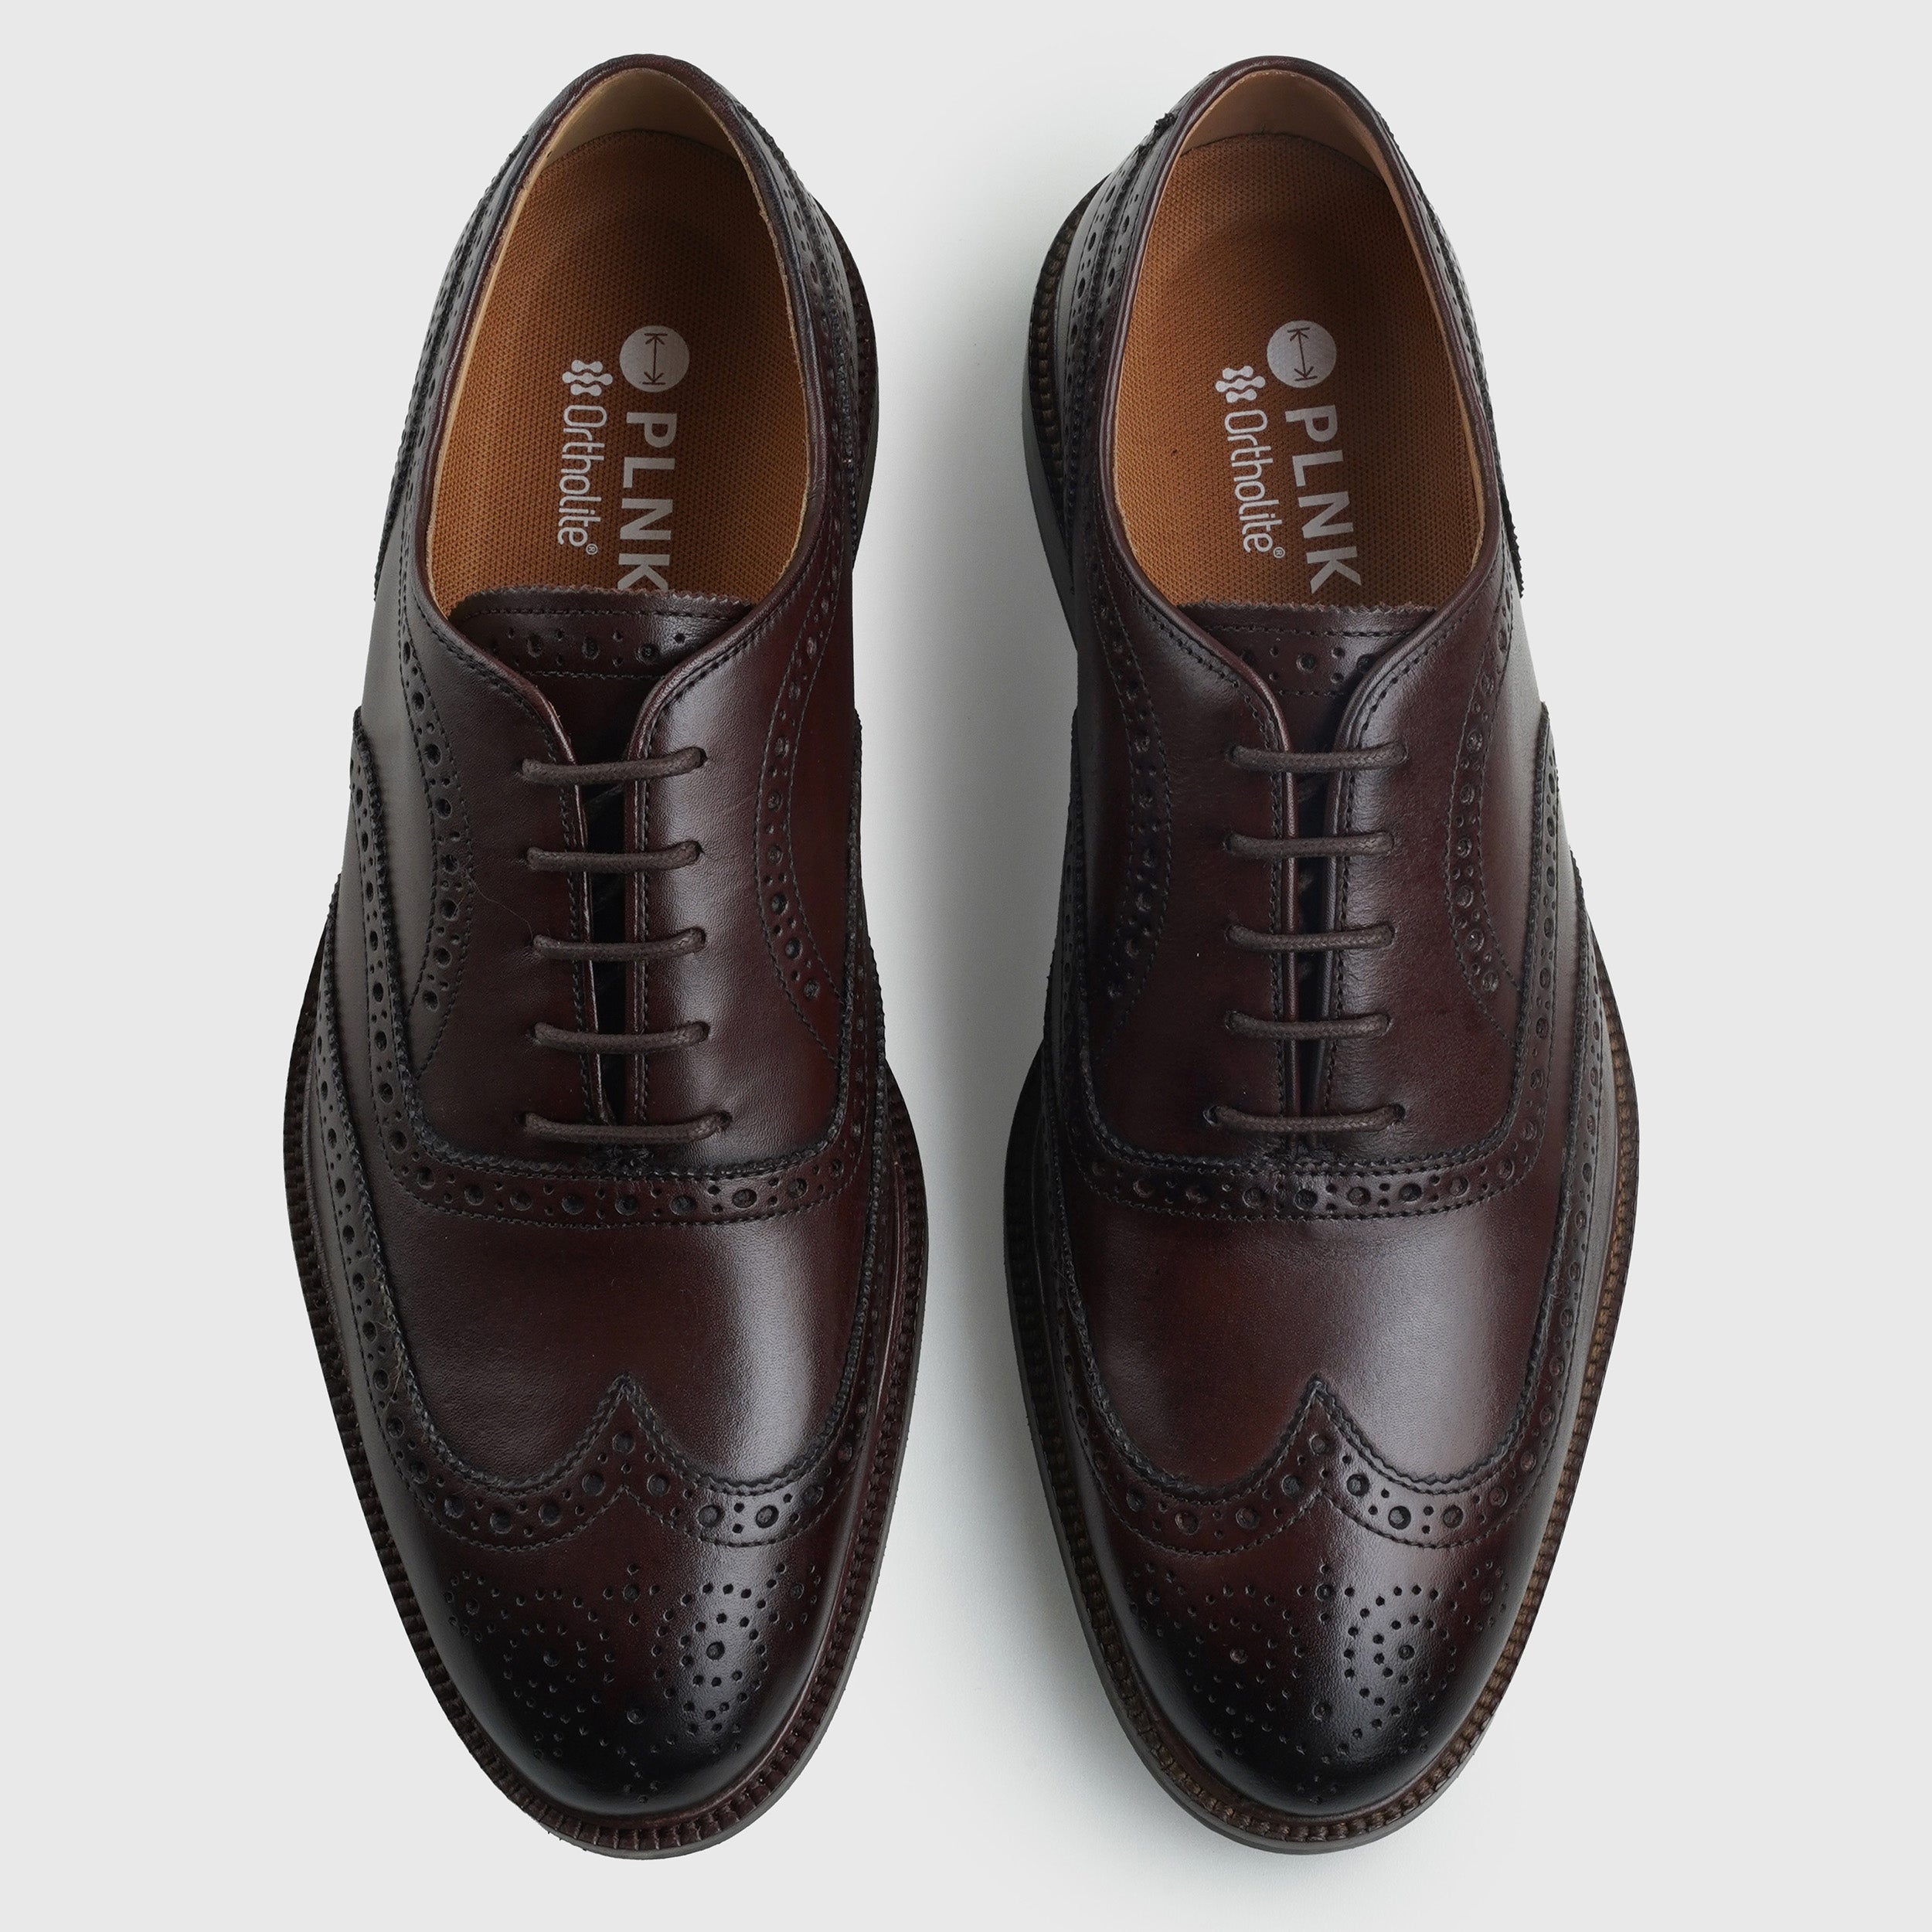 Wingtip Oxfords Brown 9464 PLNK Shoes